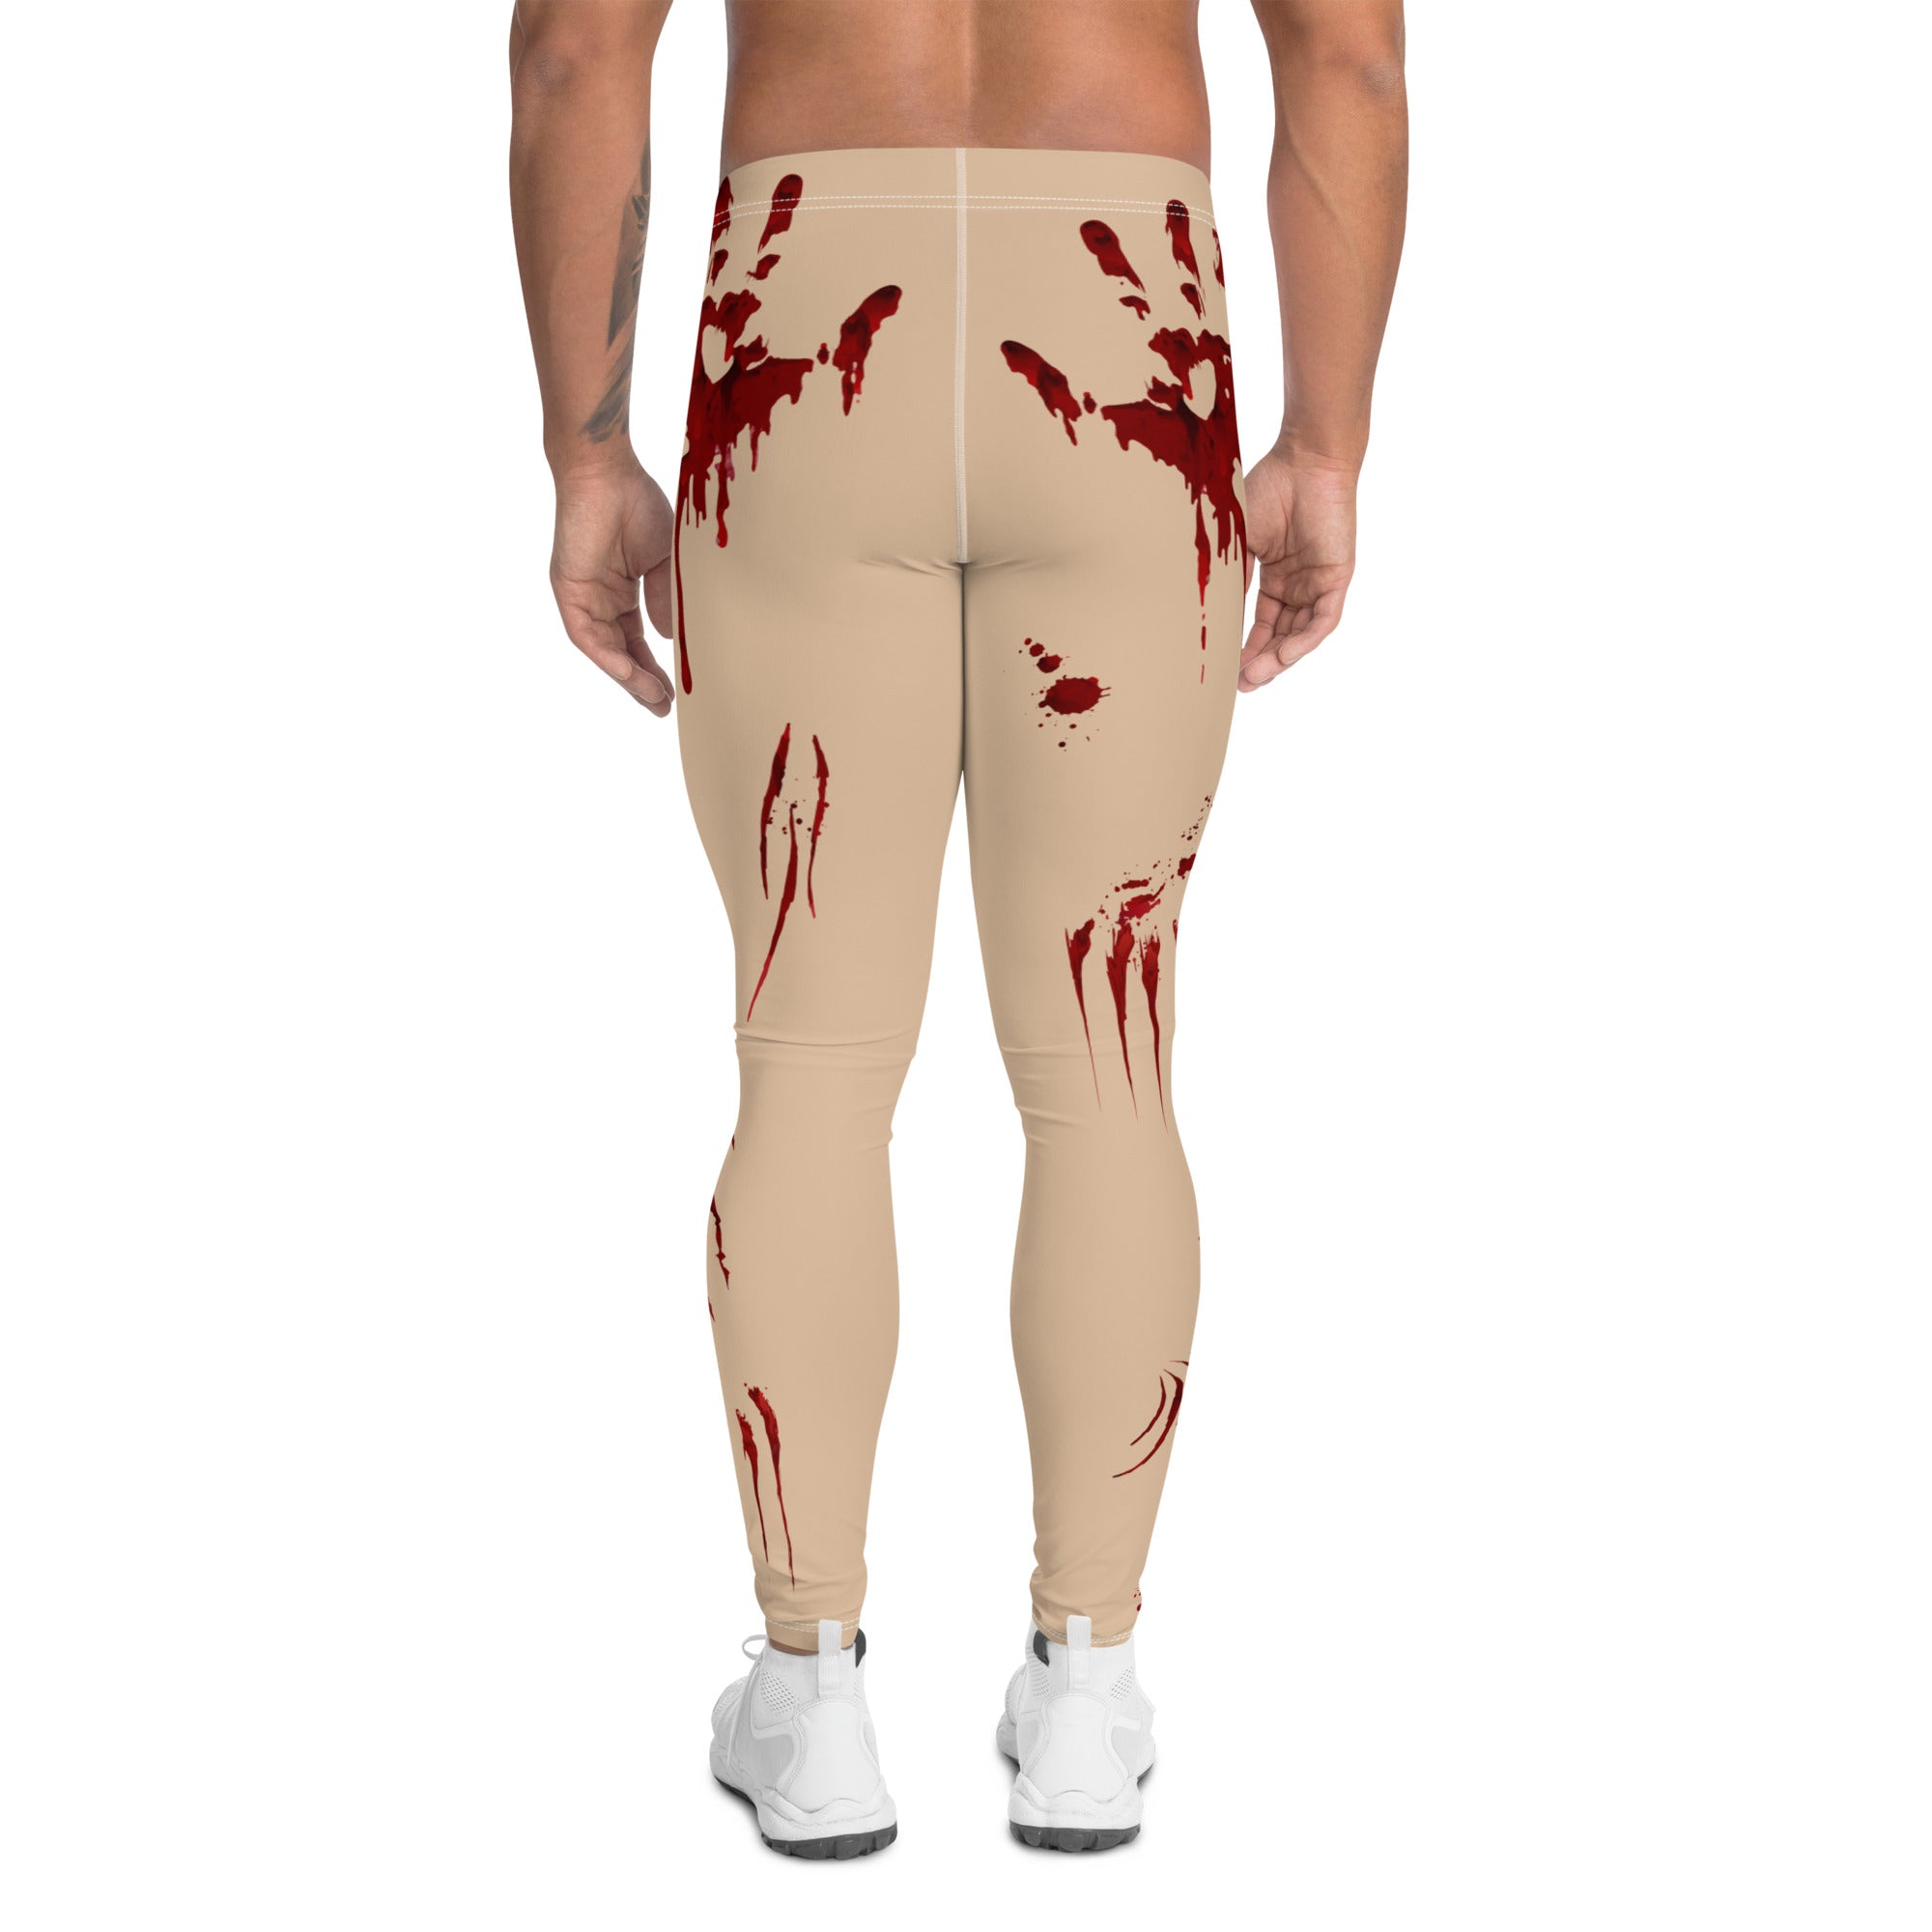 Bloody Halloween Men's Leggings